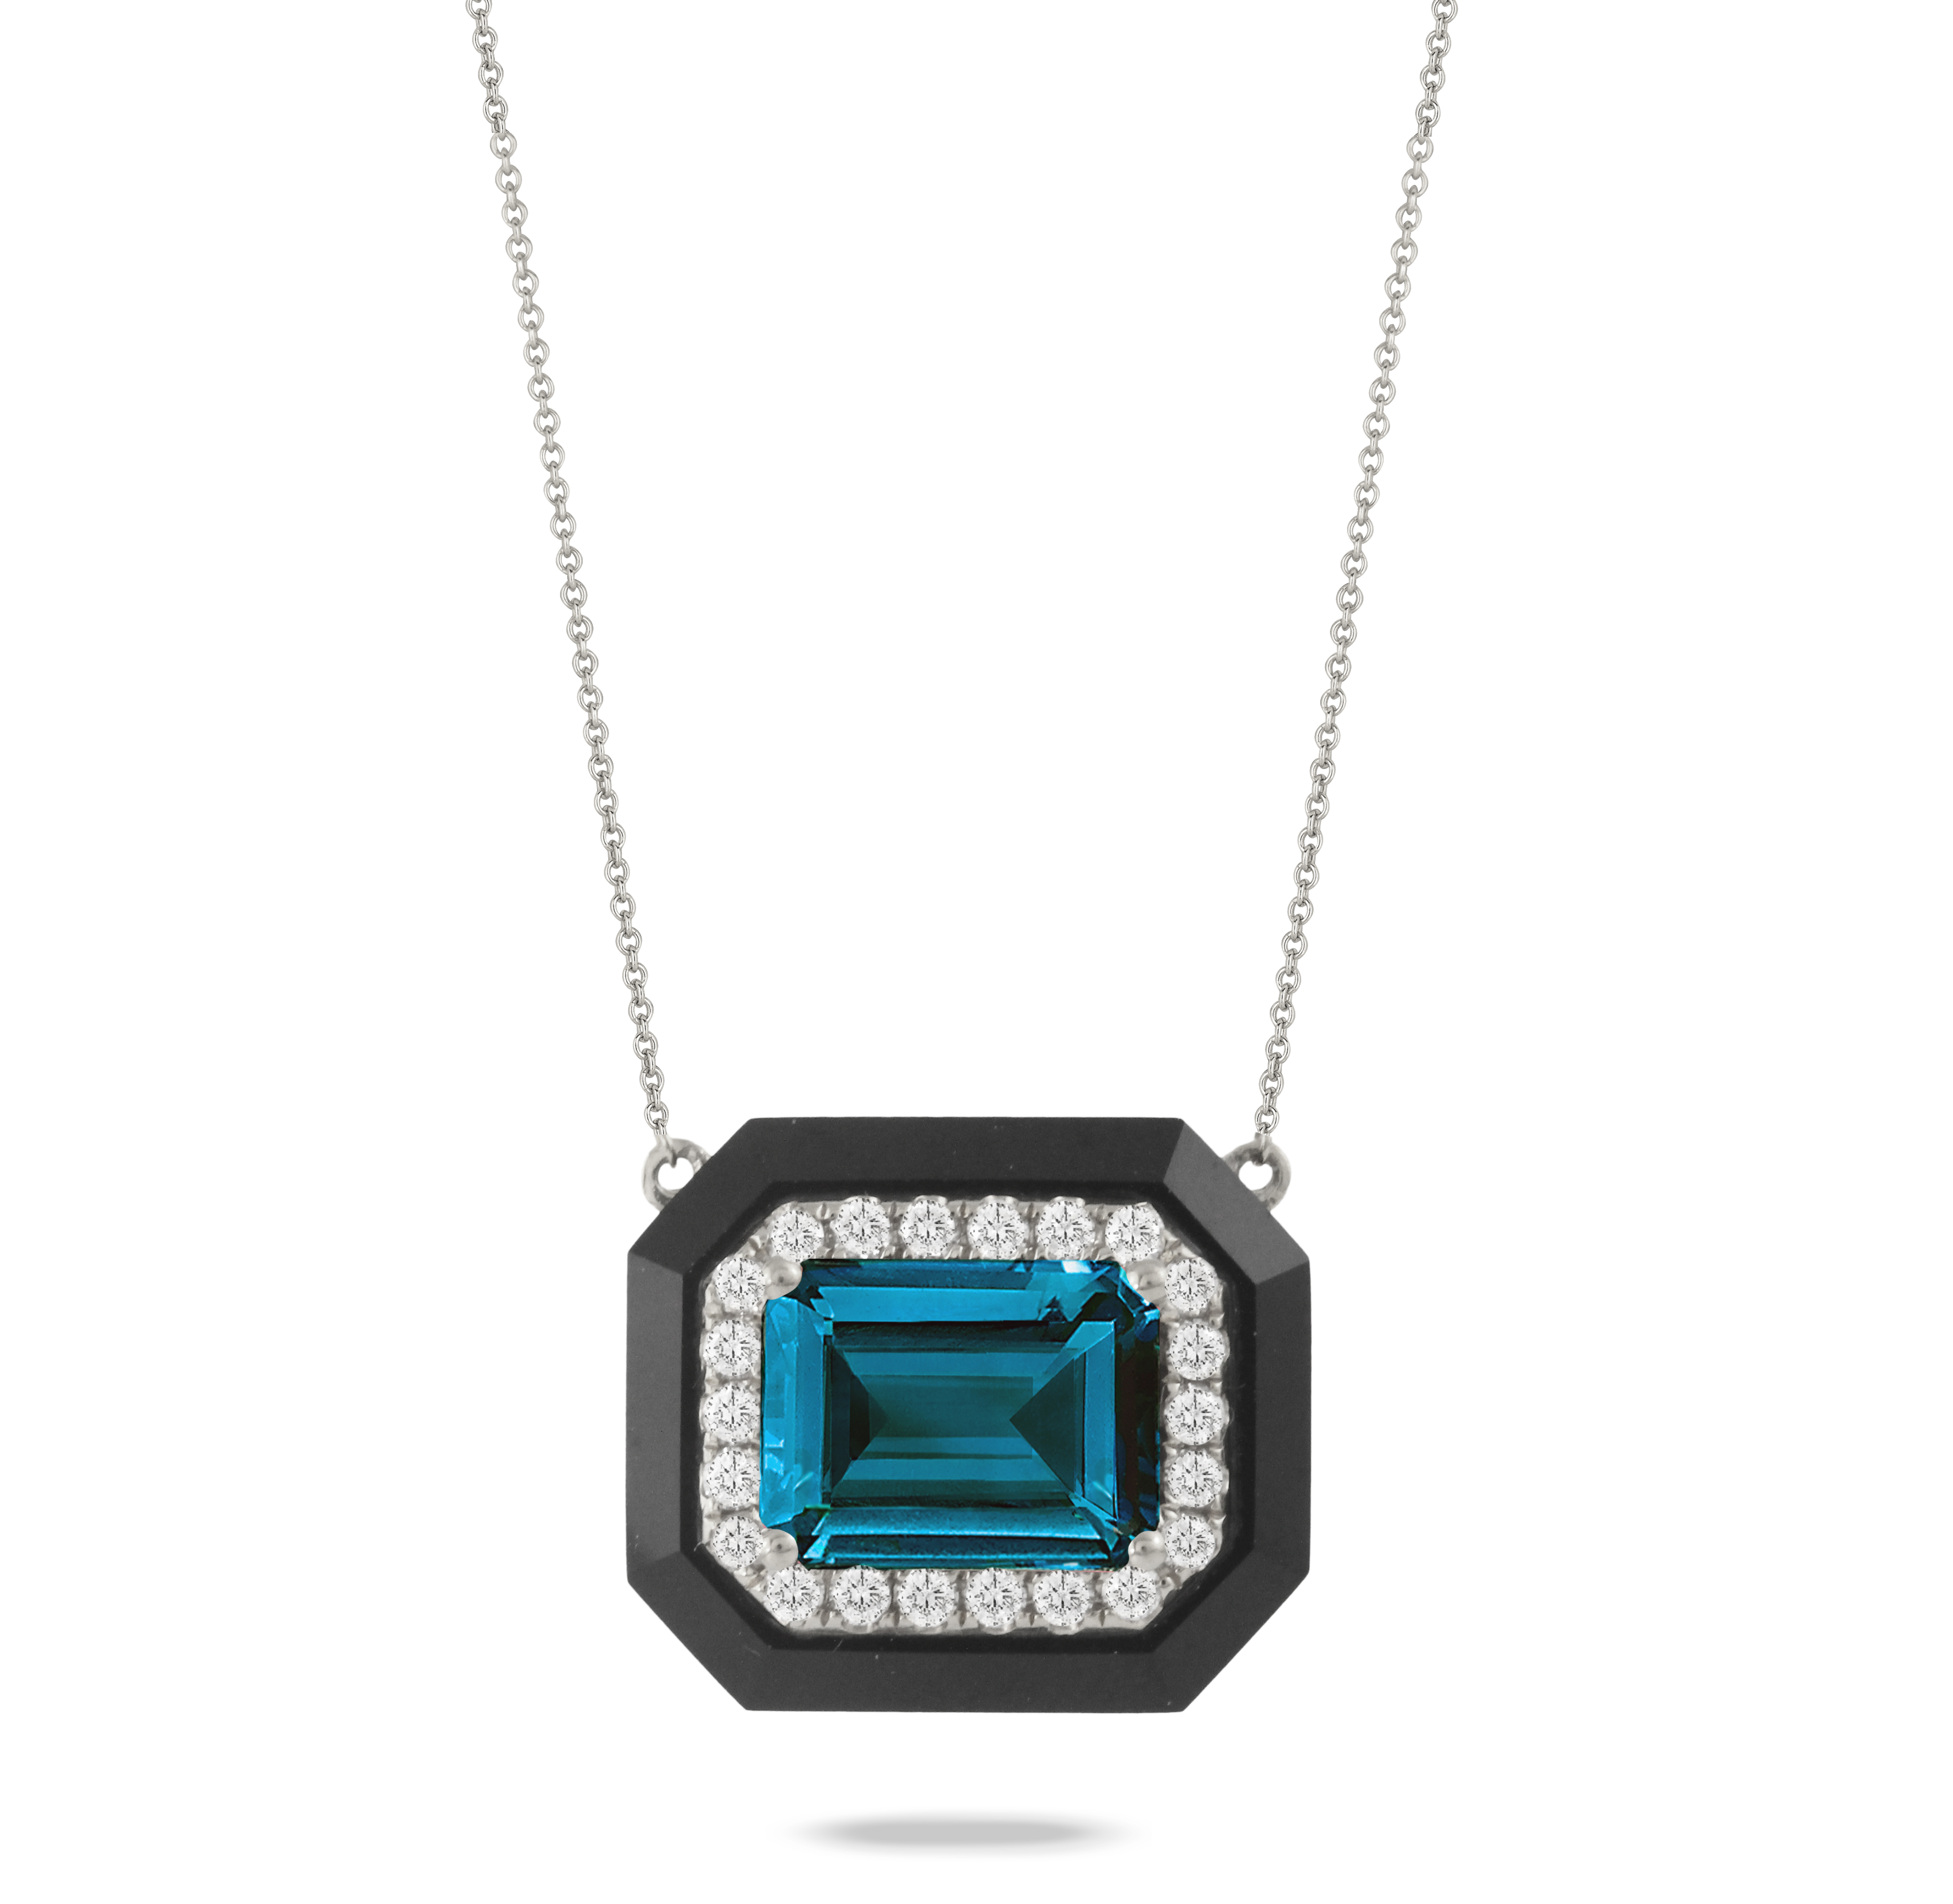 18K White Gold Onyx Necklace - 18K White Gold Diamond Necklace With Black Onyx And London Blue Topaz